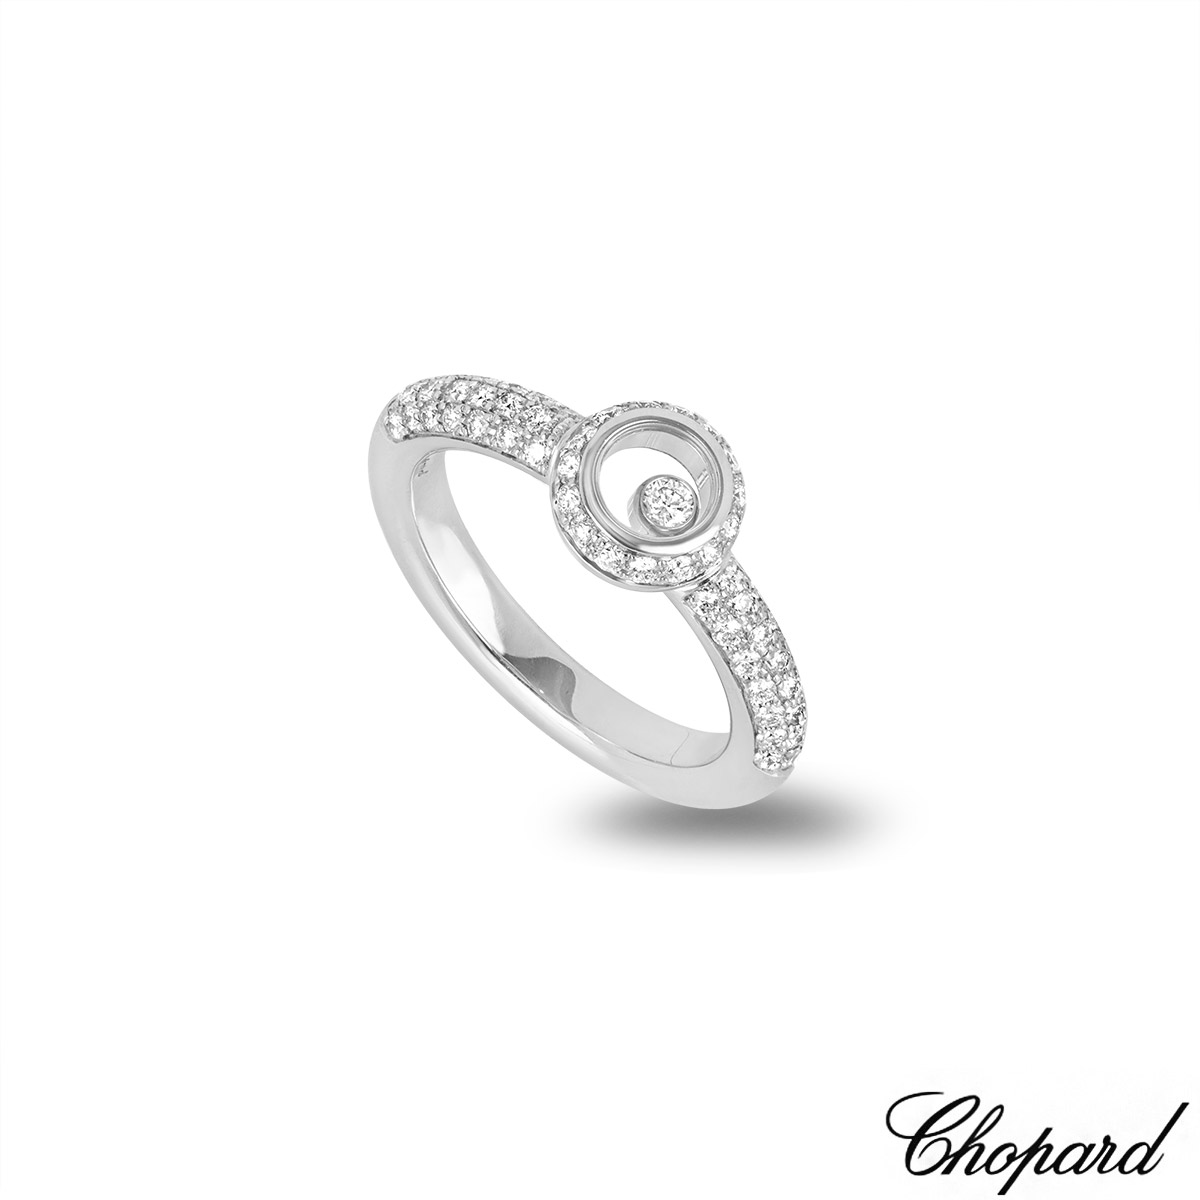 Chopard White Gold Happy Diamonds Ring 82/2902-1110